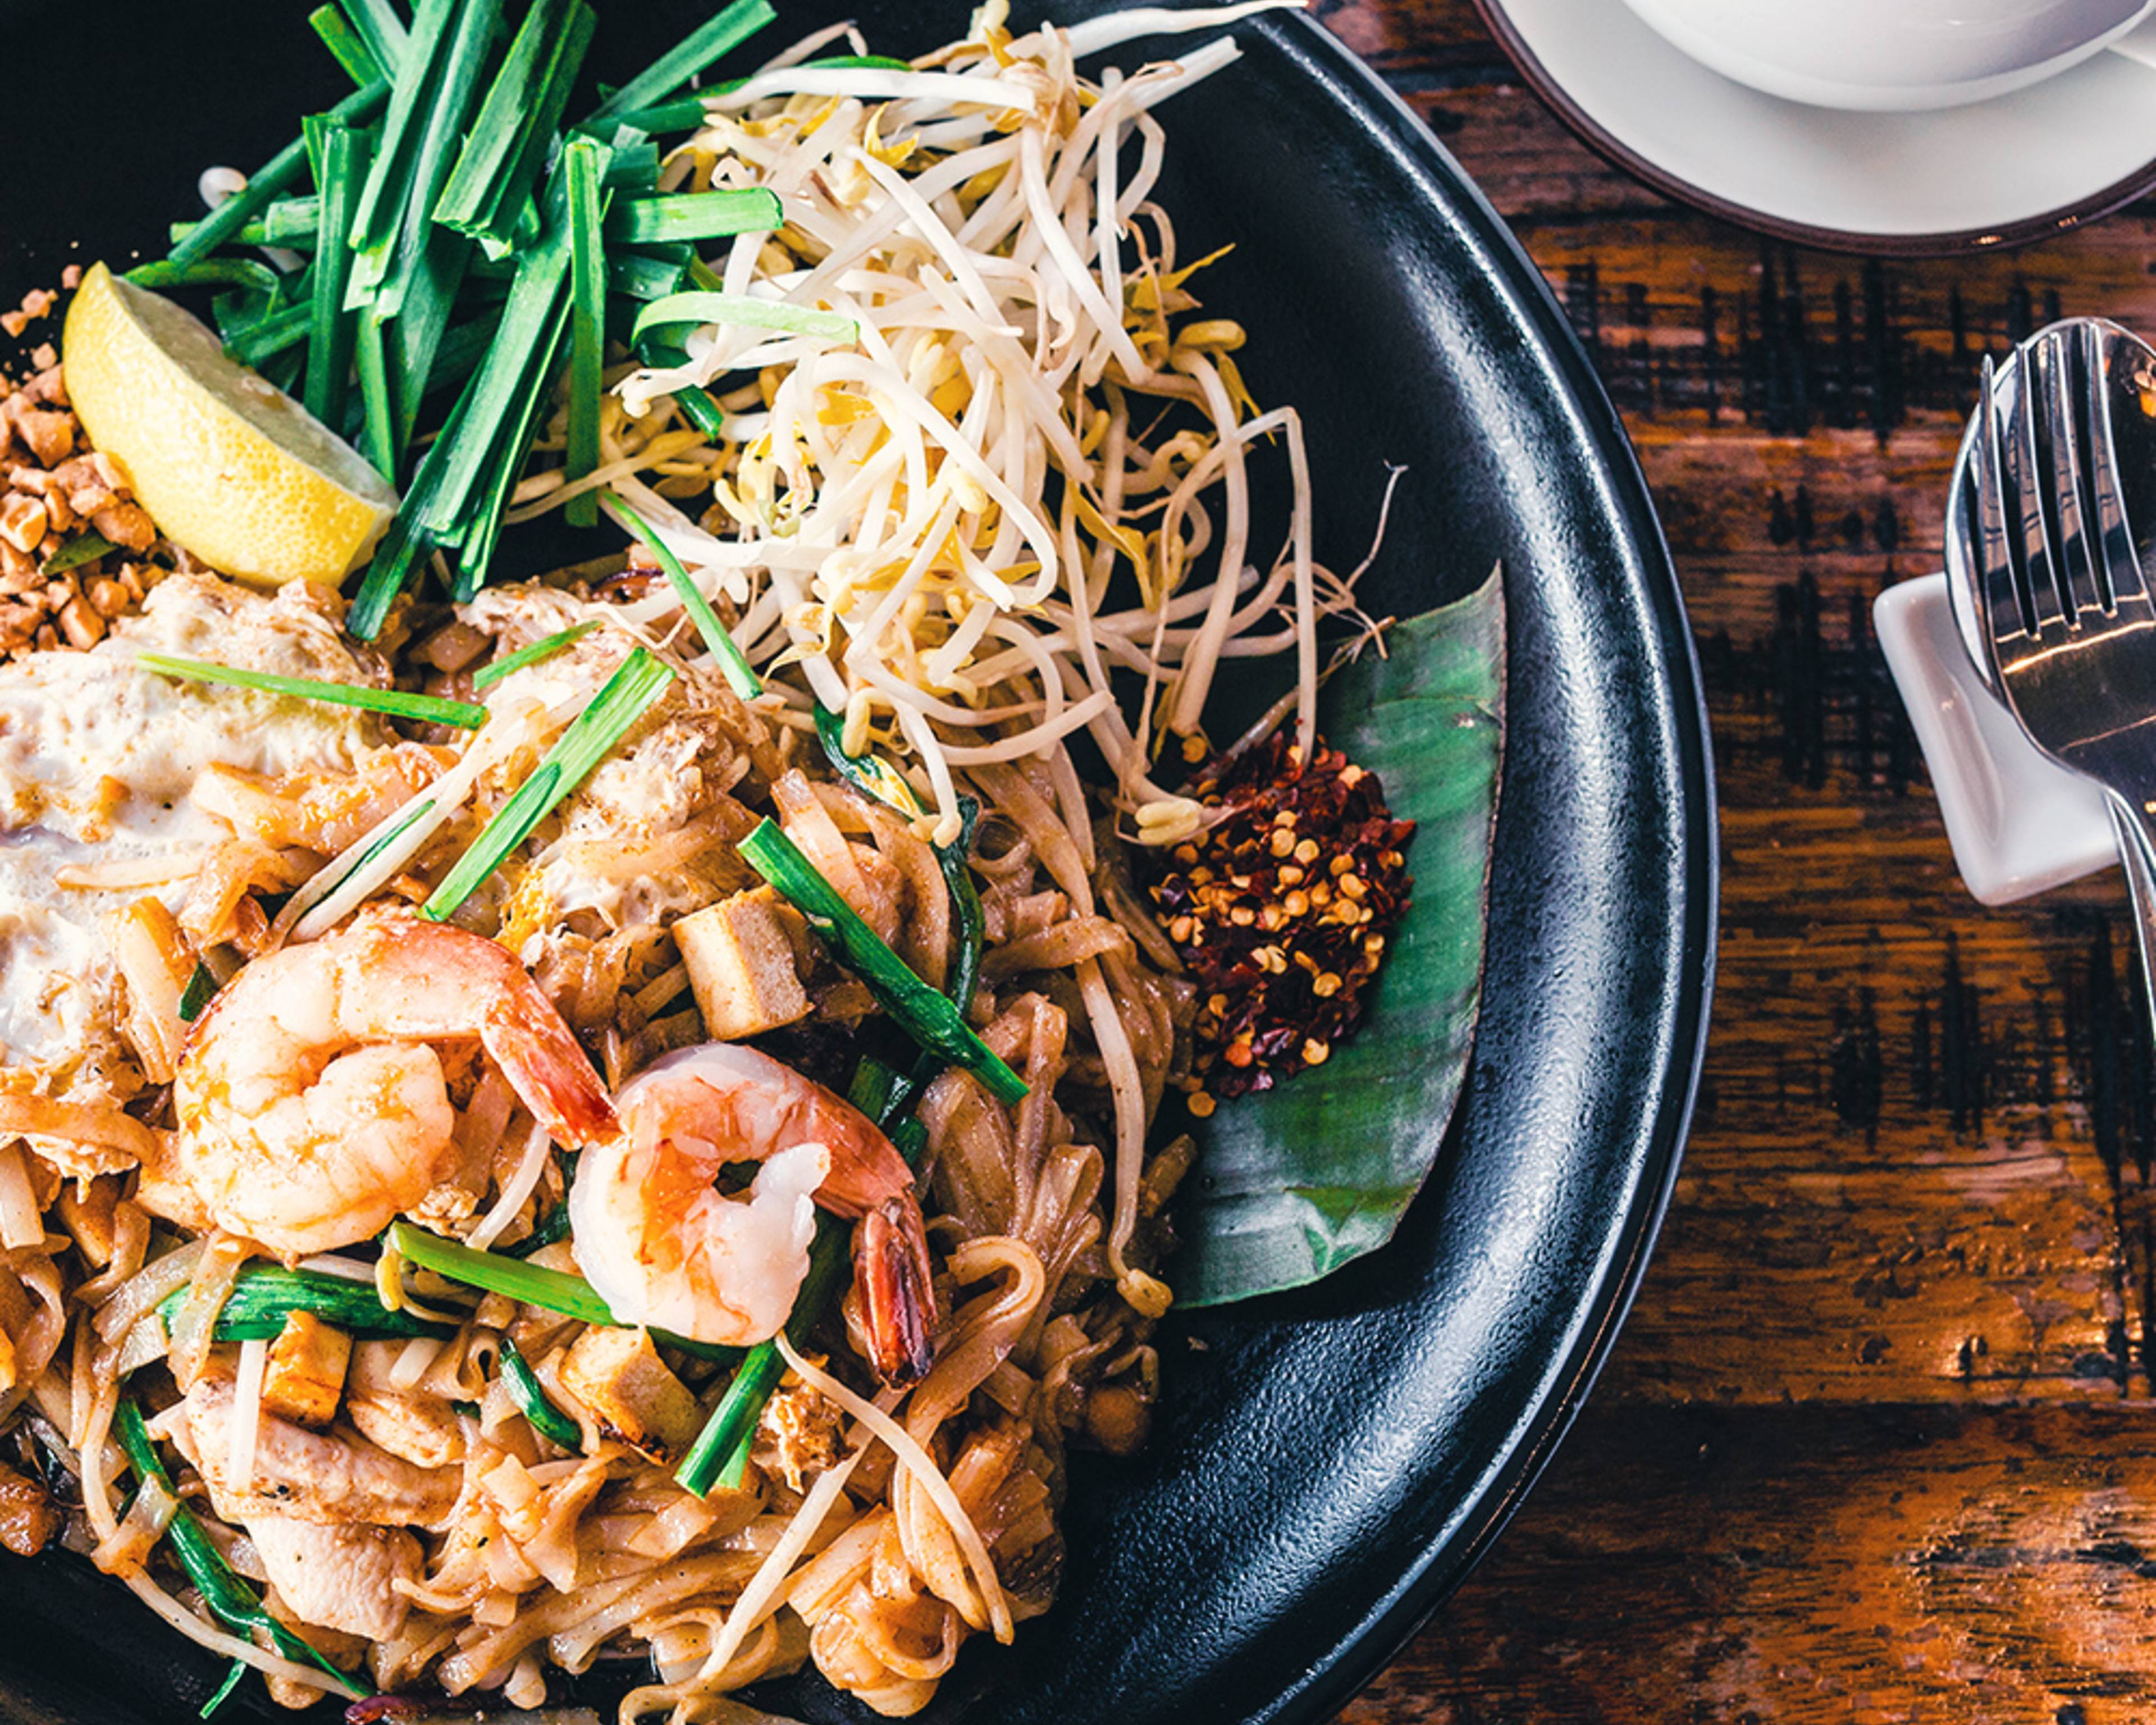 Votre voyage Gastronomique en Thaïlande